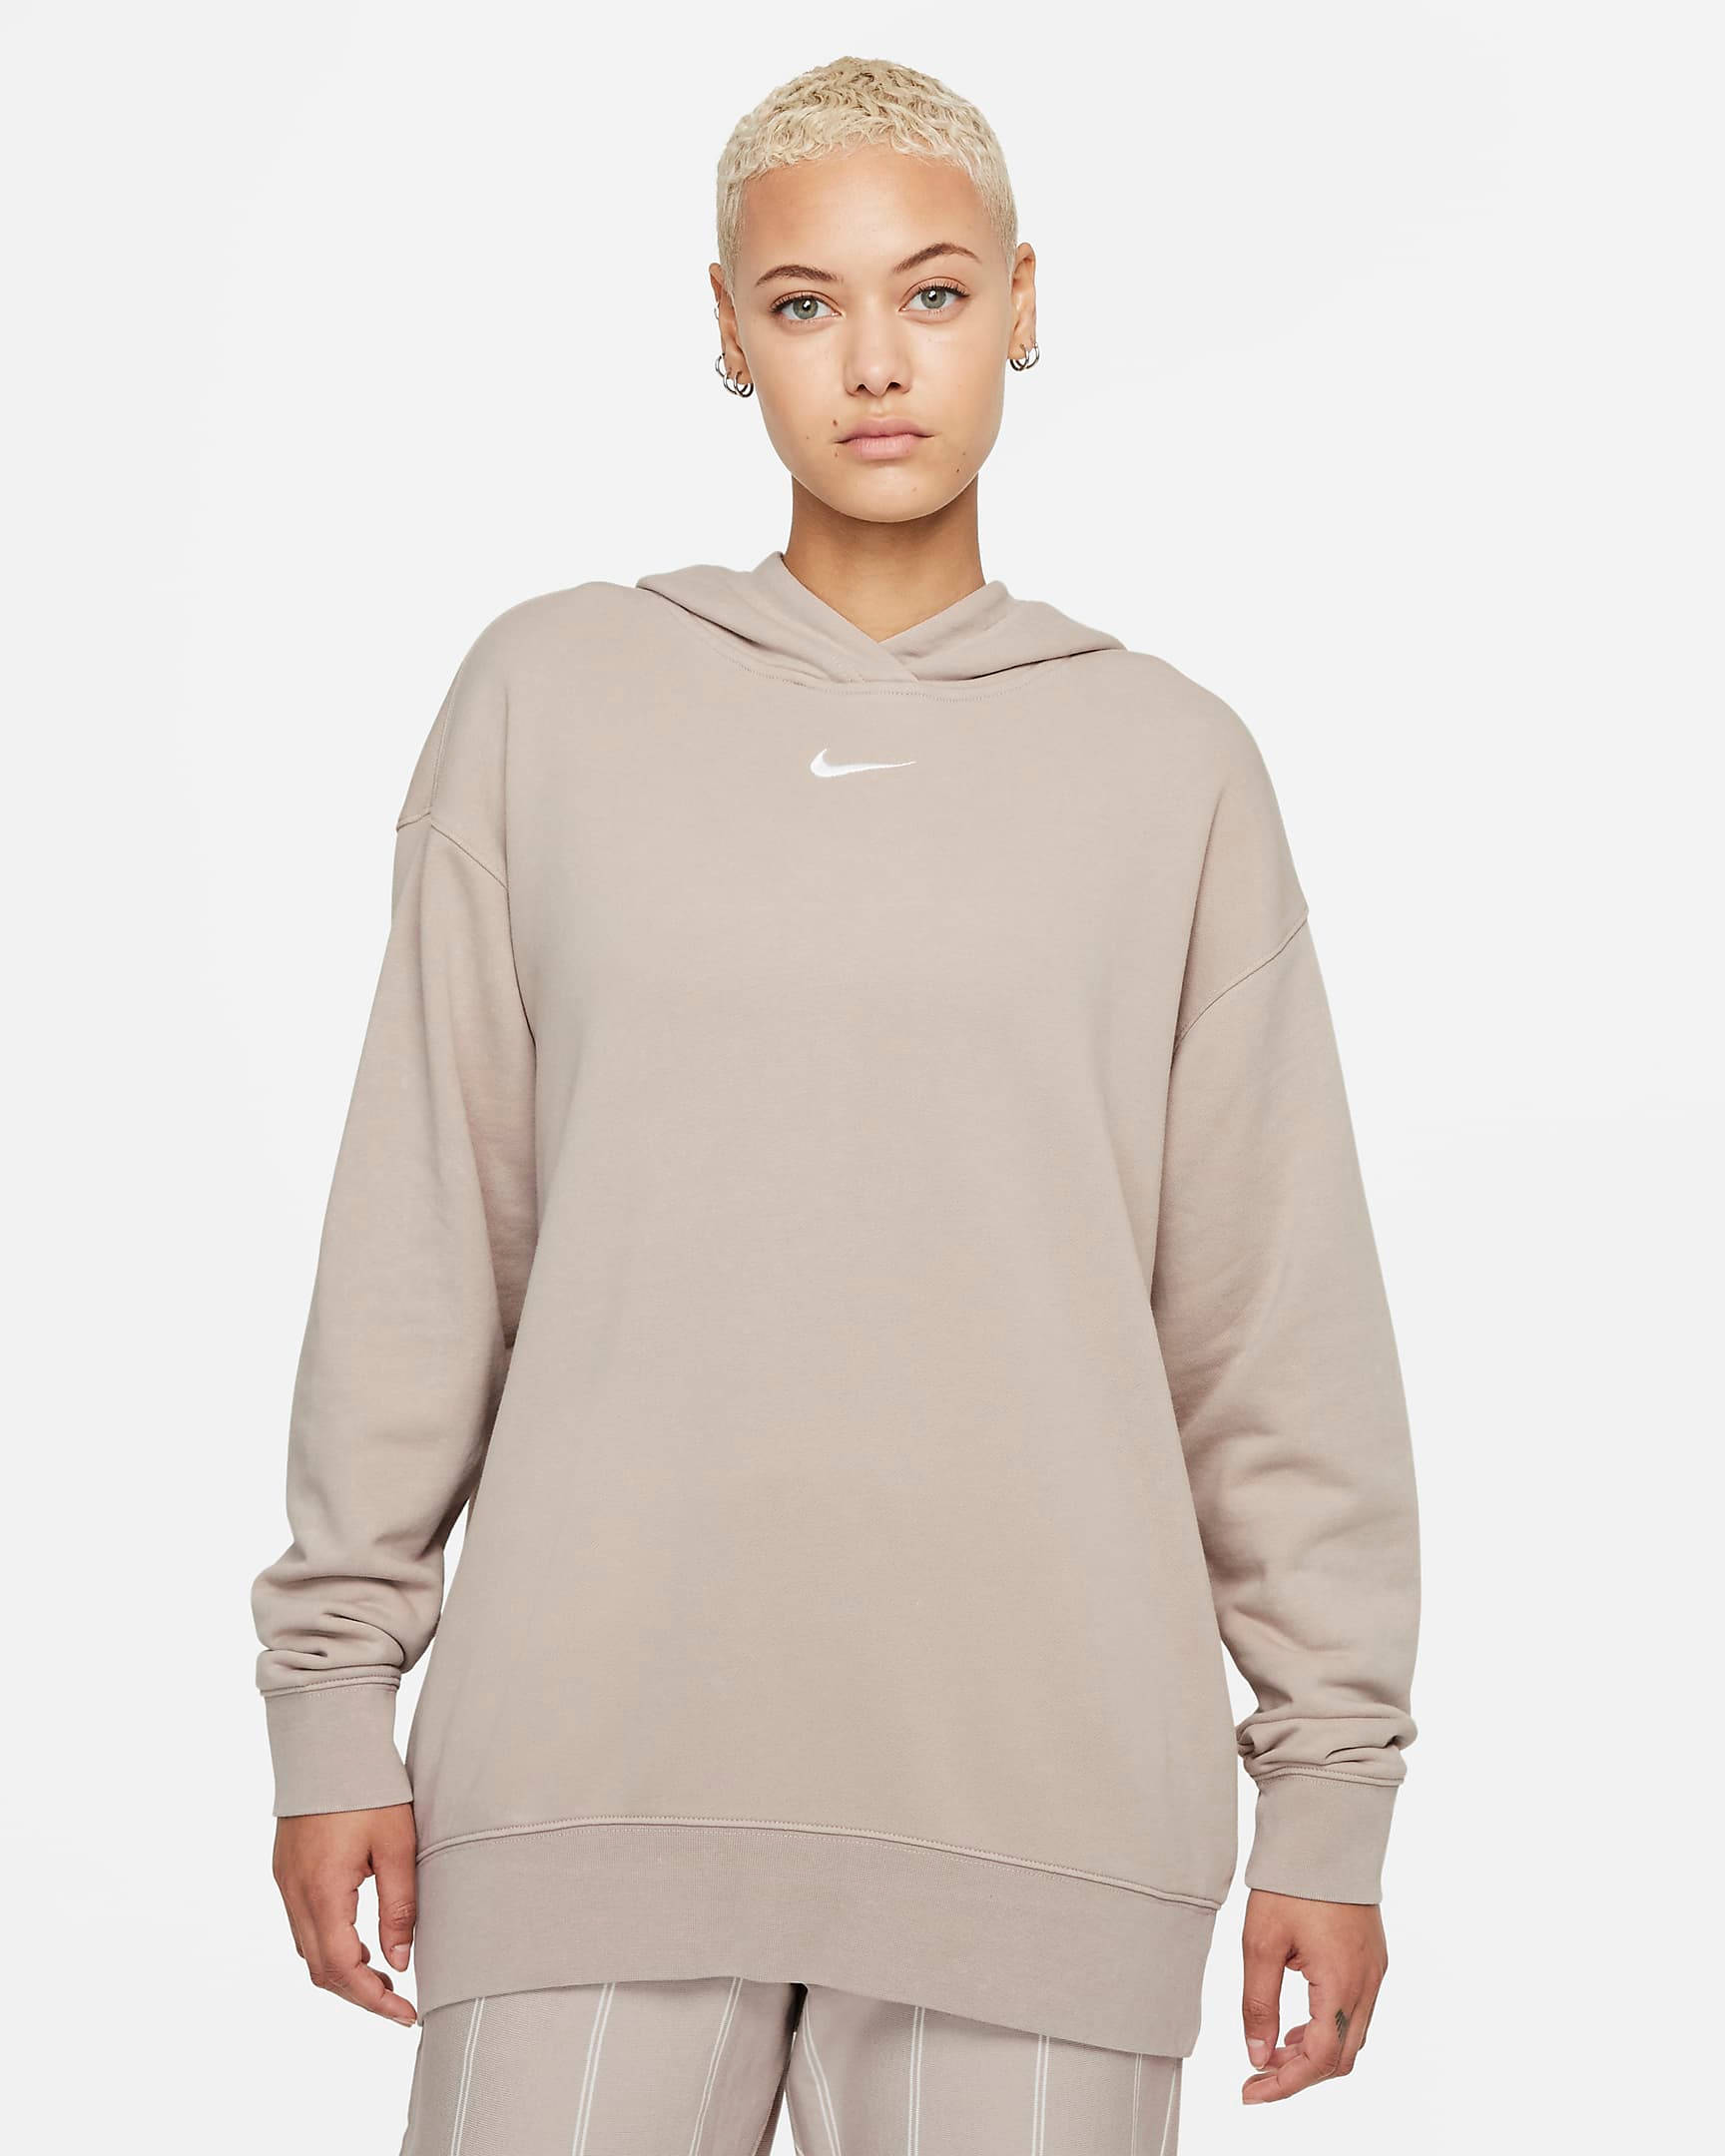 Nike Sportswear Essential Collection Fleece Hoodie - Cream II | The ...